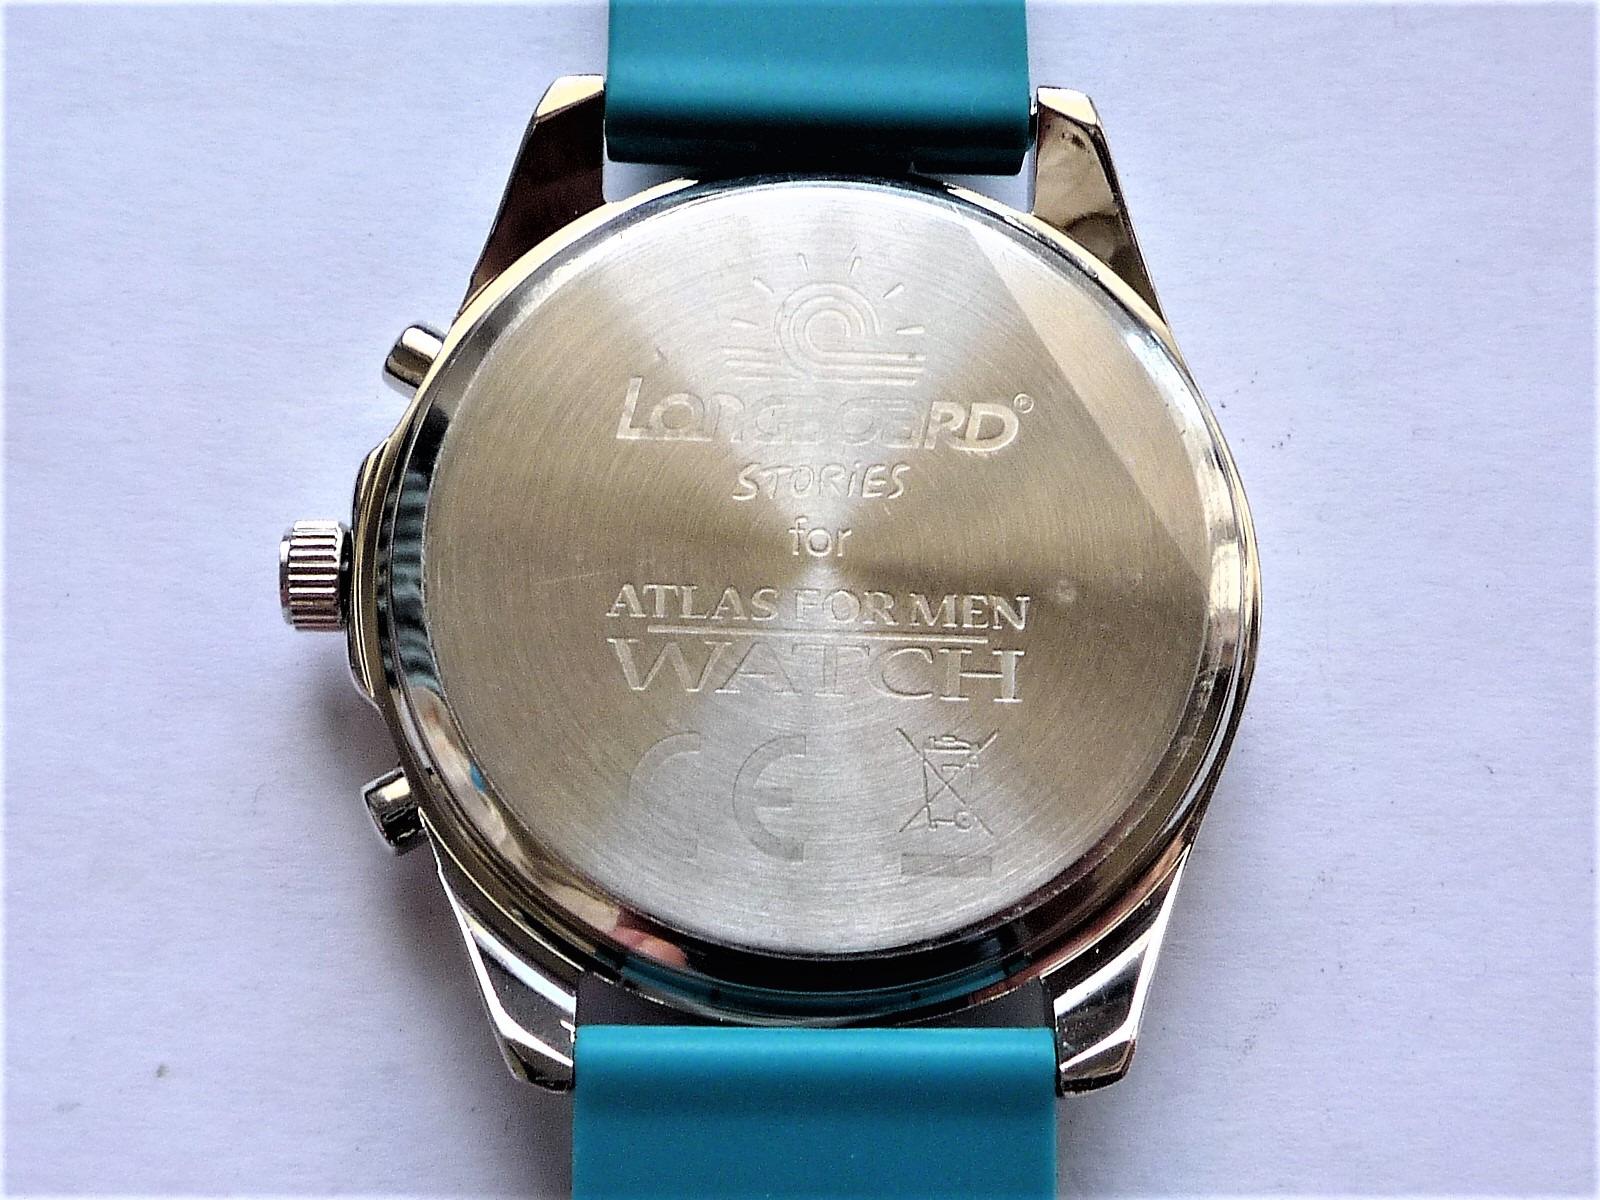 Náramkové hodinky LONGBOARD, nenošené #564-55 - Šperky a hodinky